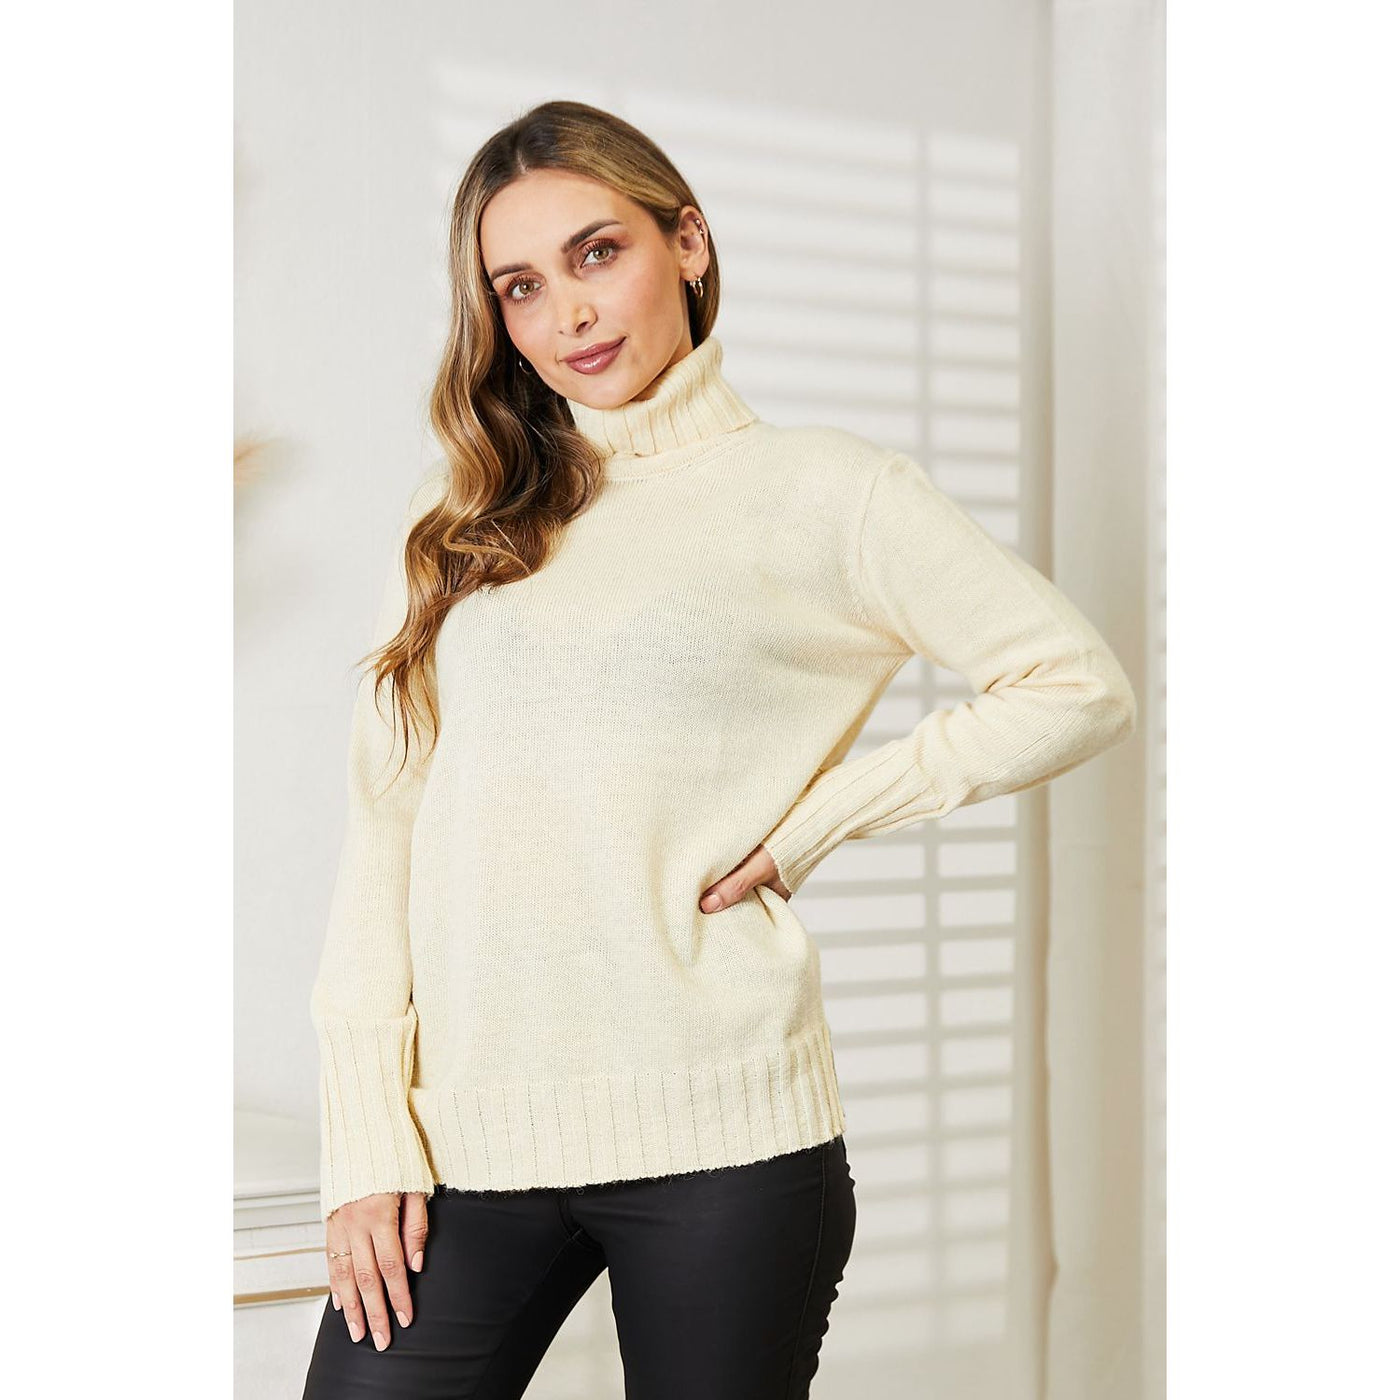 Margie Long Sleeve Turtleneck Sweater with Side Slit